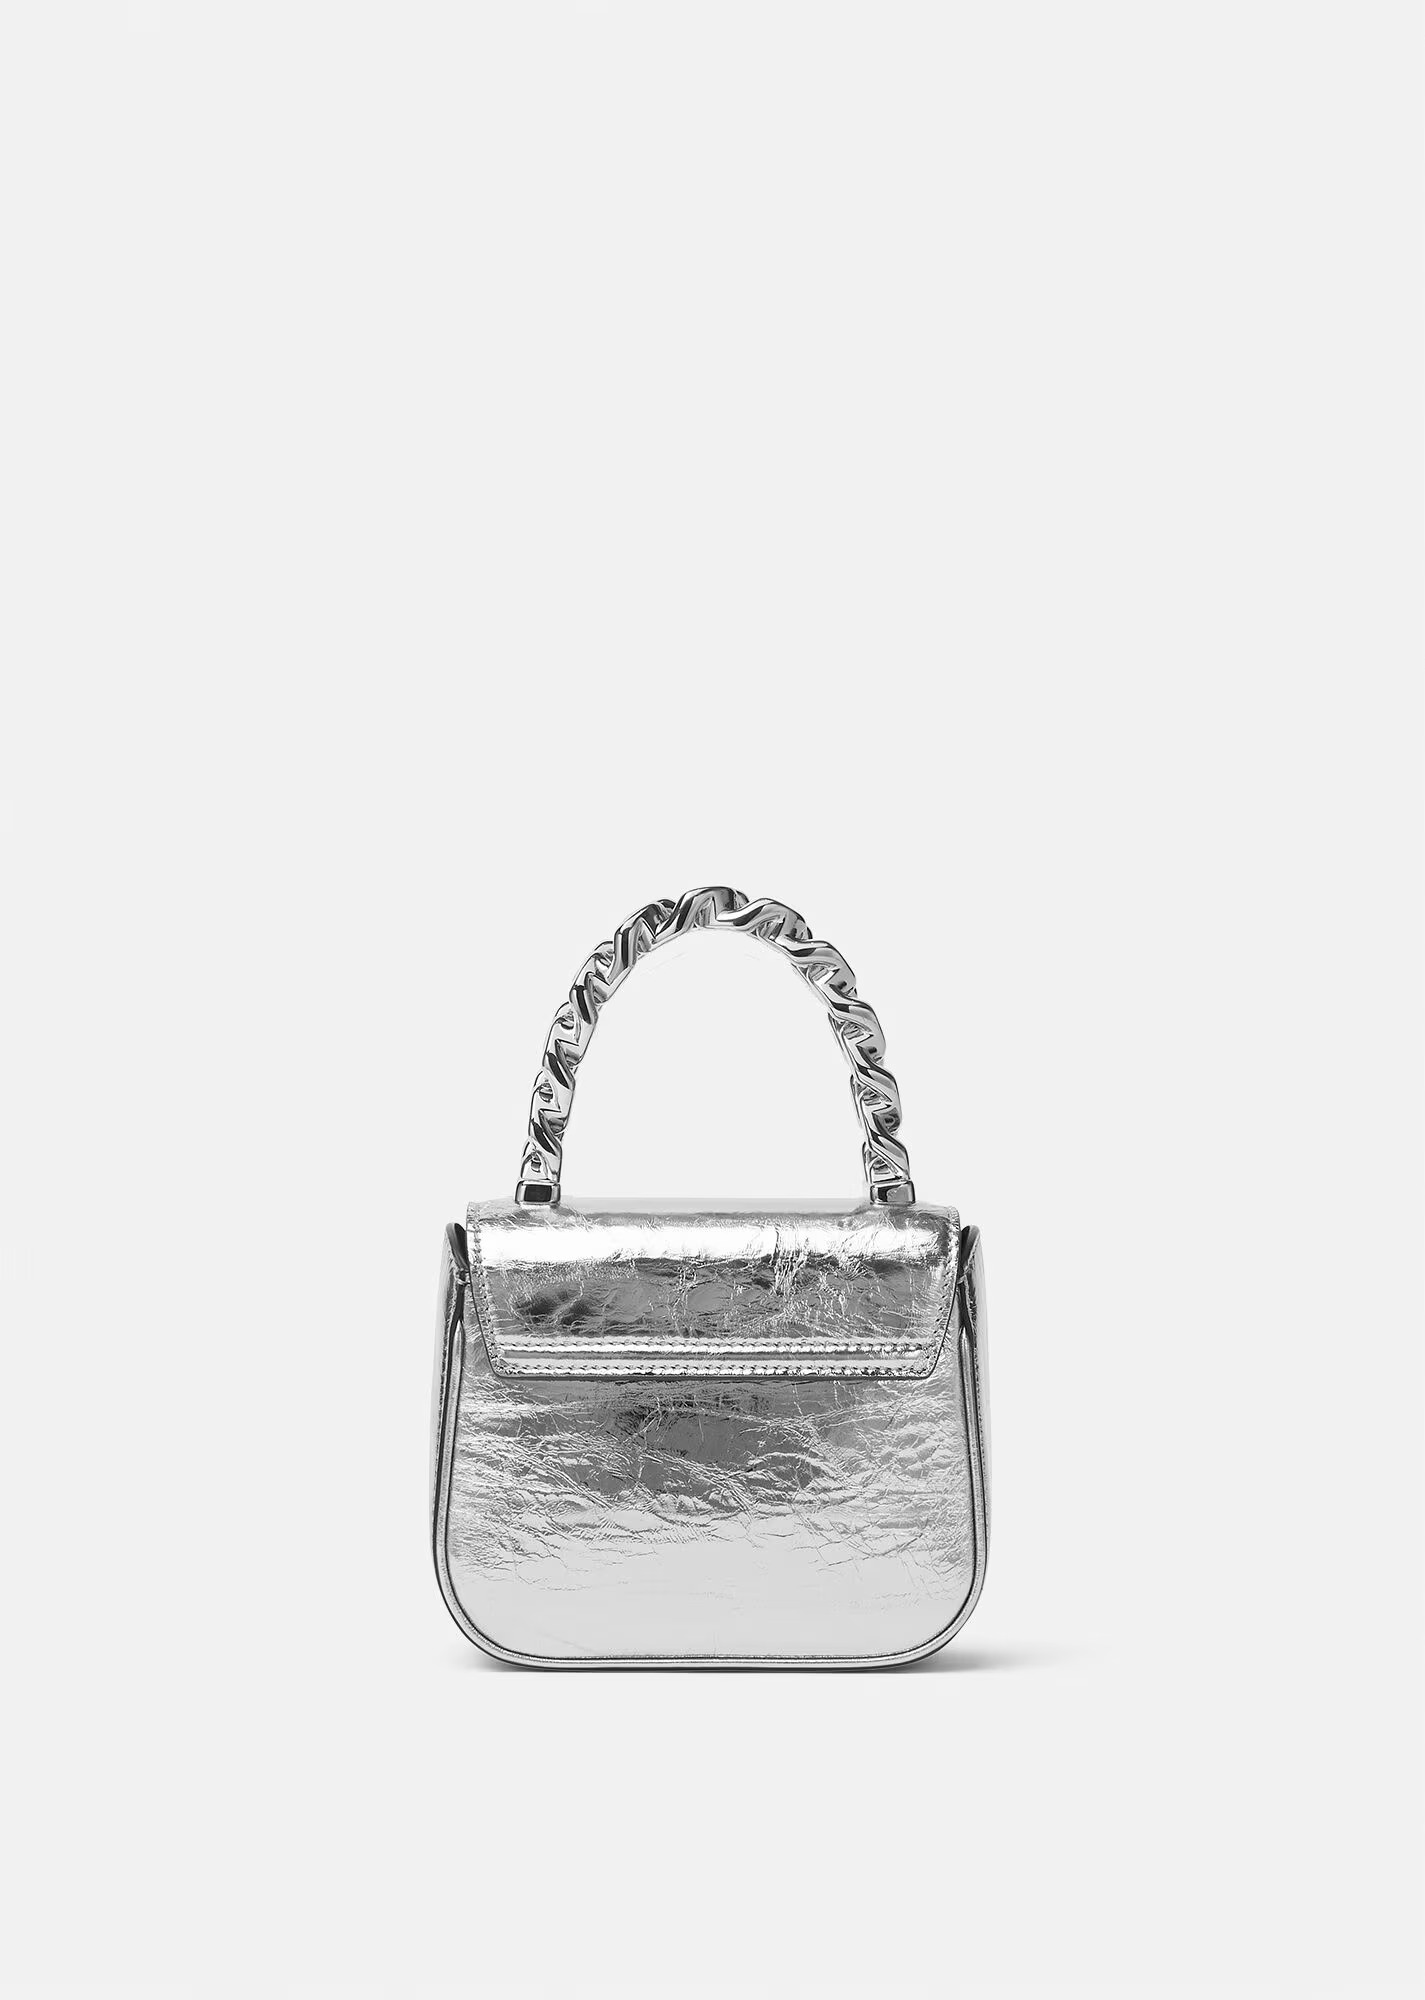 A bag women's silver La Medusa 16 cm фото 3